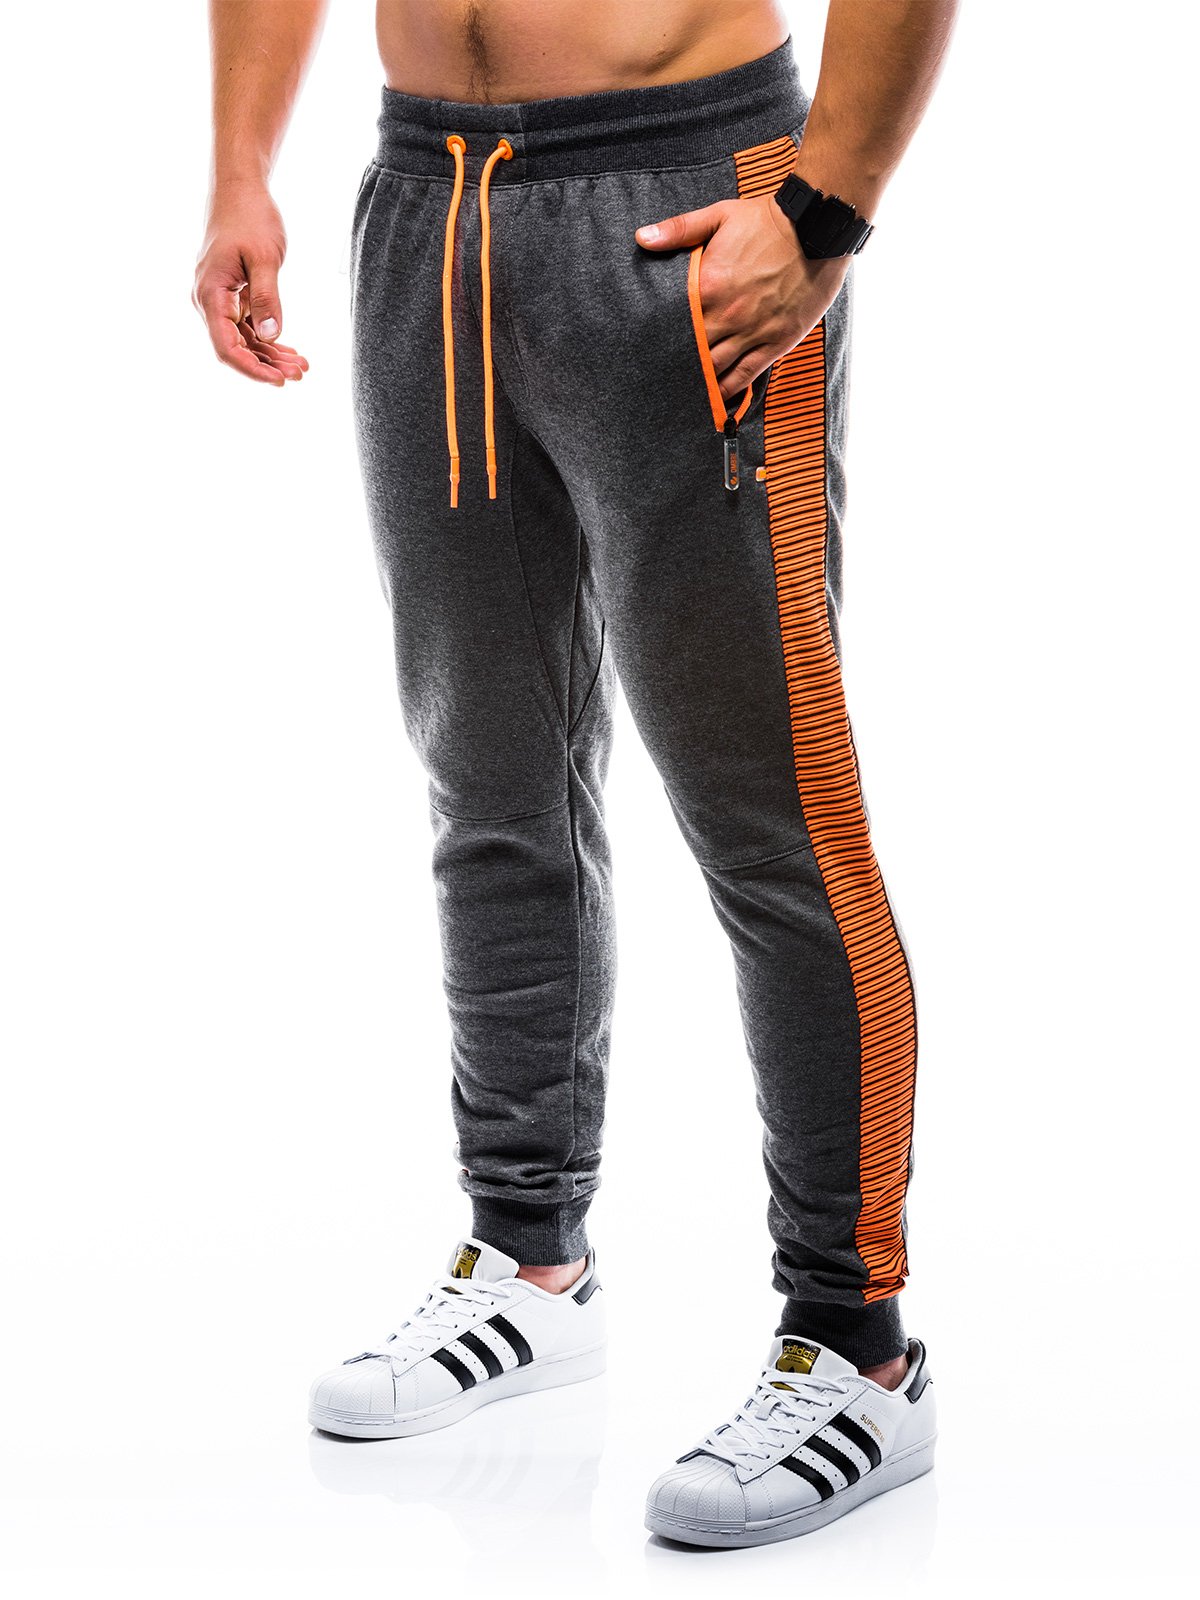 Men's sweatpants P730 - dark grey/orange | MODONE wholesale - Clothing ...